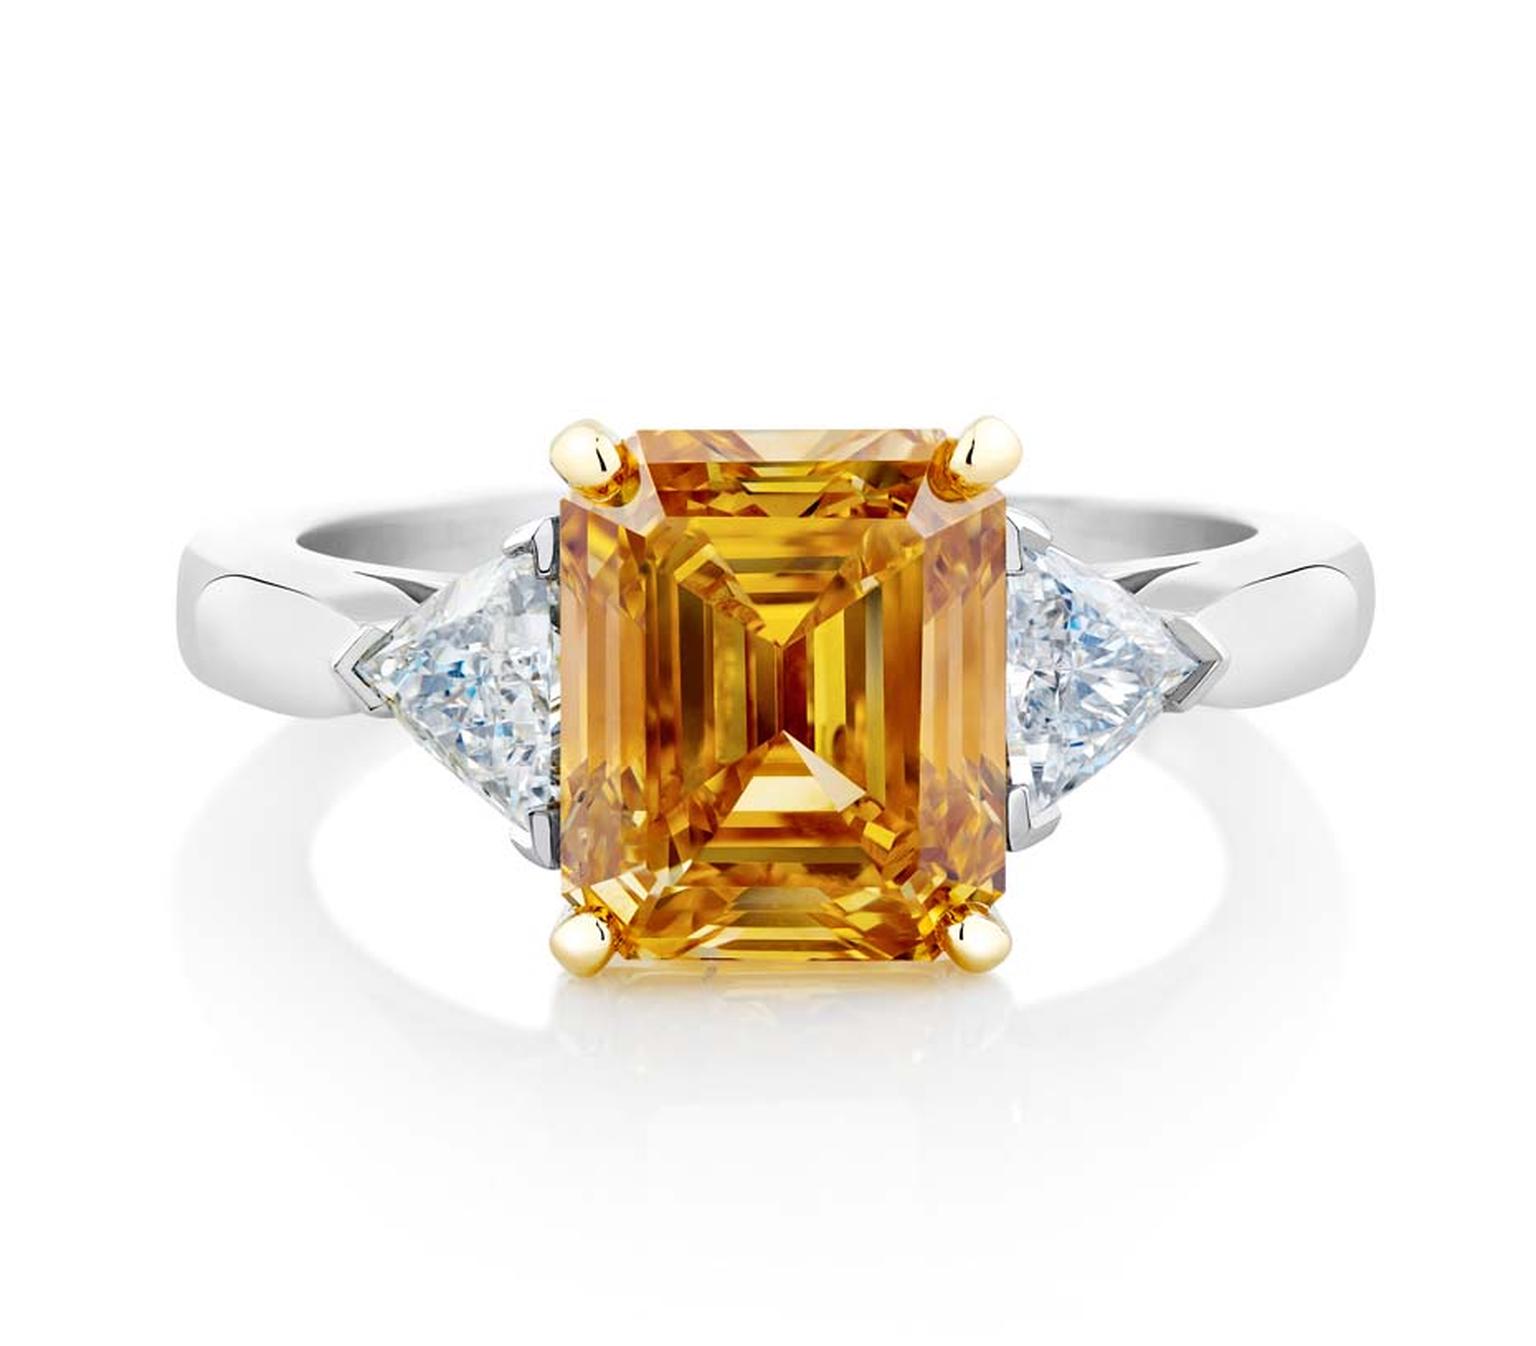 De Beers simple shank emerald-cut Fancy Vivid yellow orange diamond engagement ring in platinum.